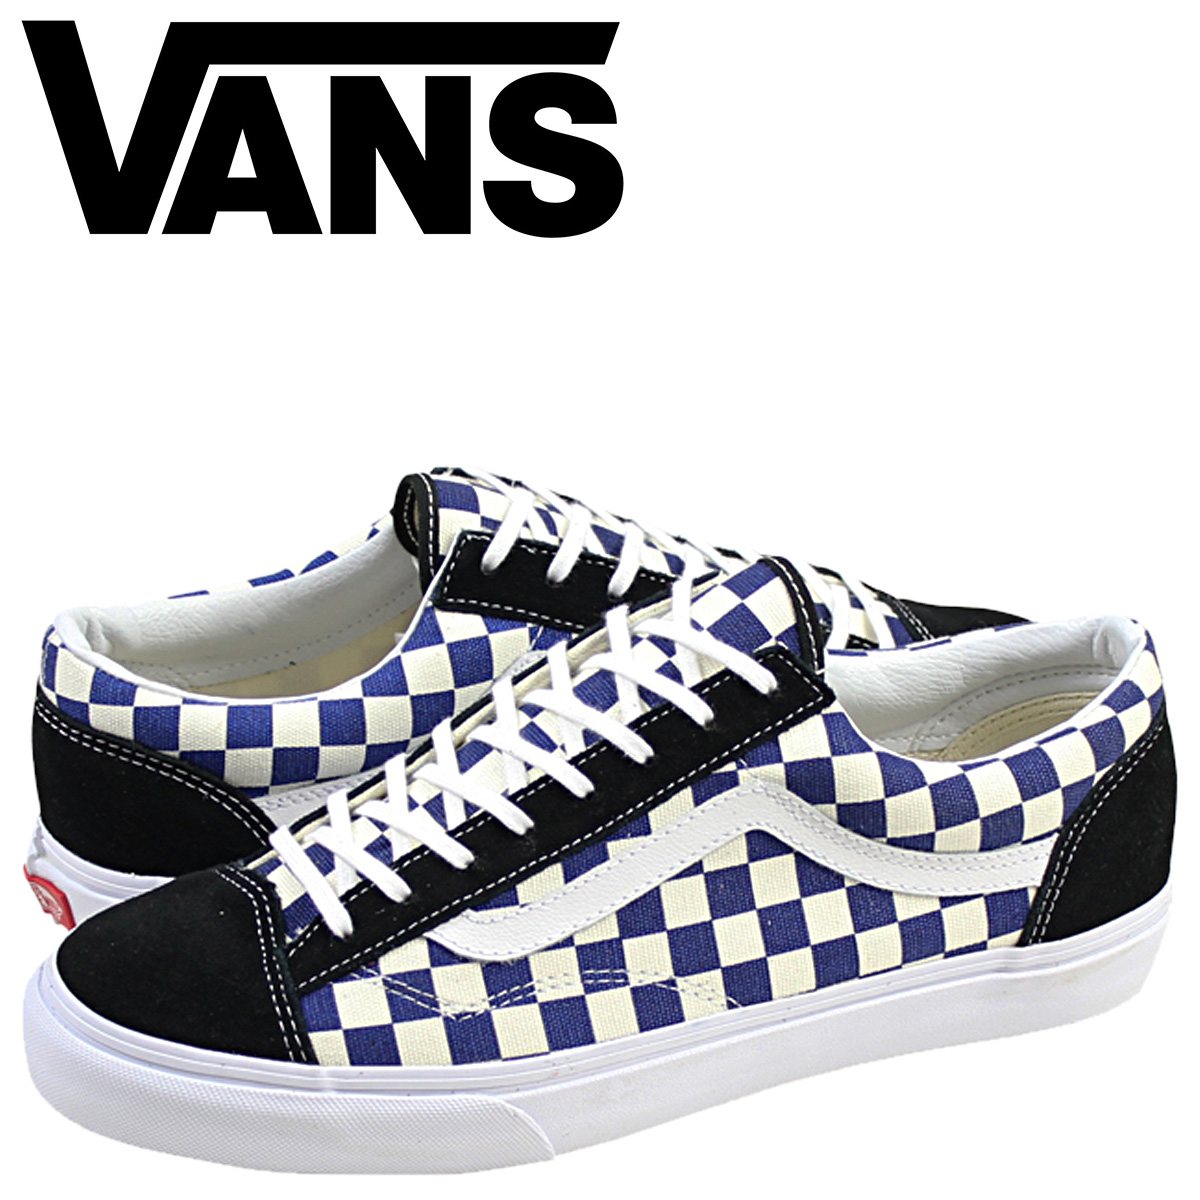 Vans Style 36 Checkerboard Online Sale 